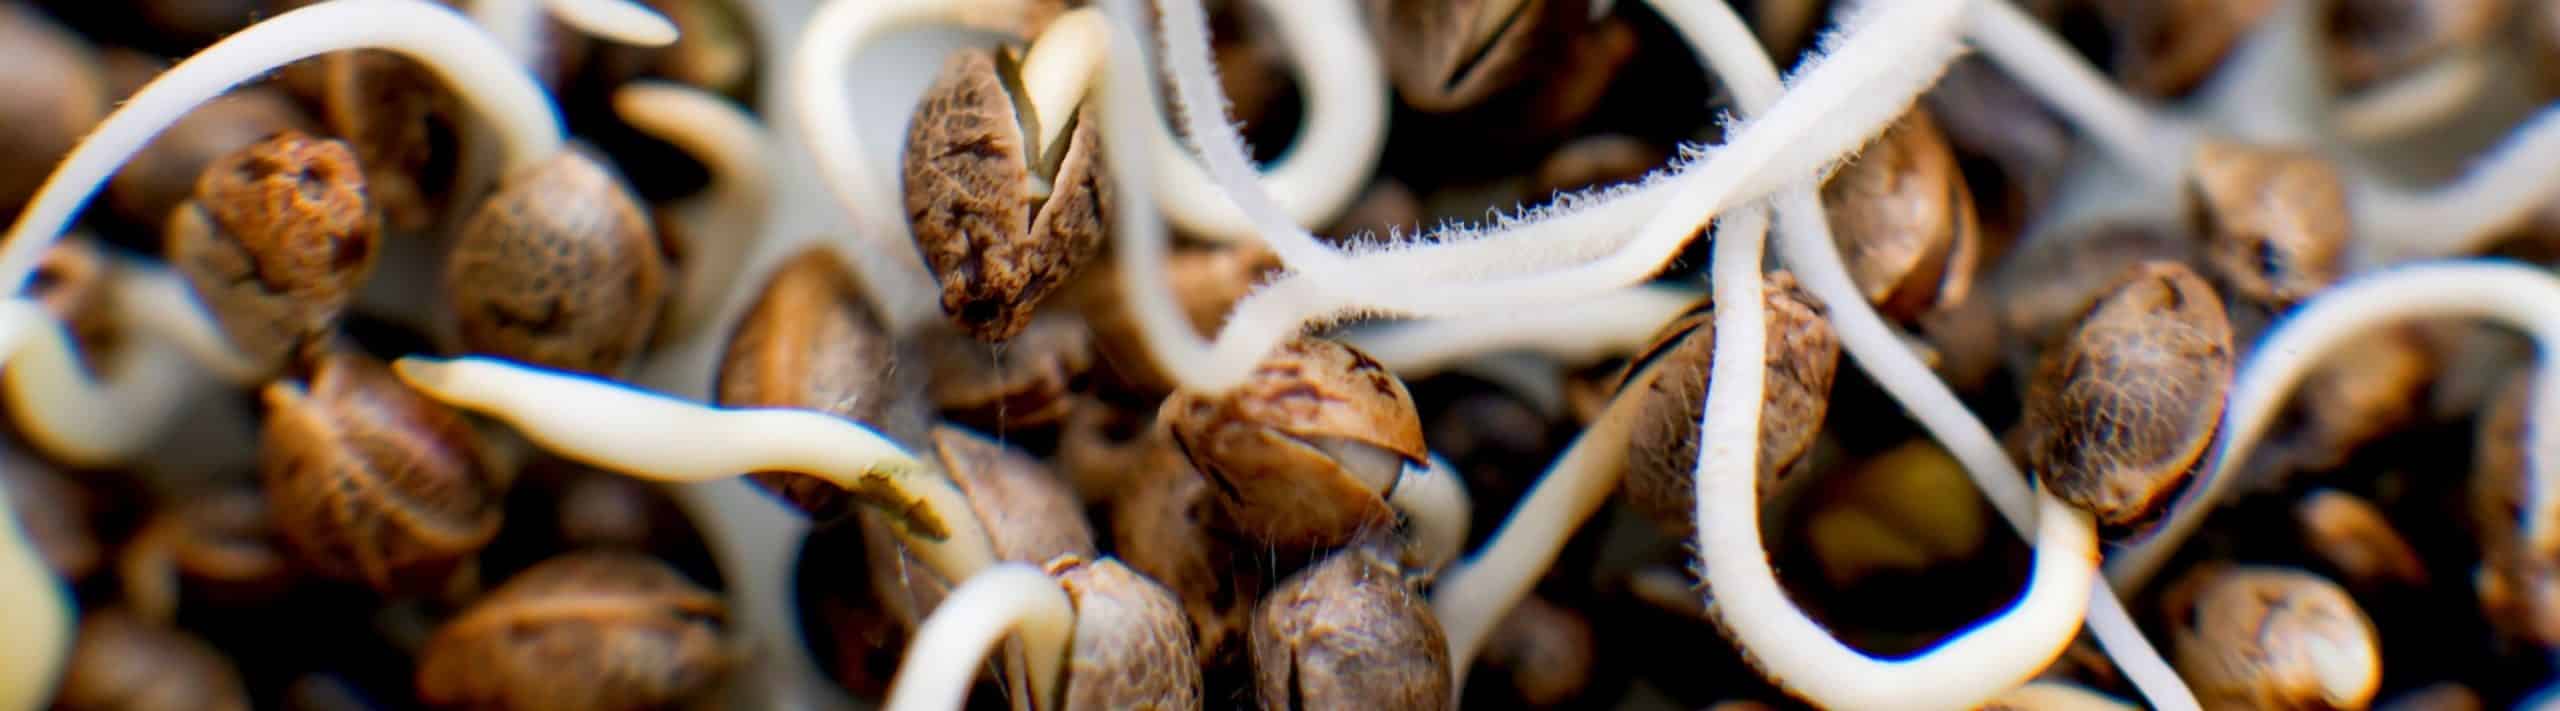 How To Germinate Marijuana Seeds